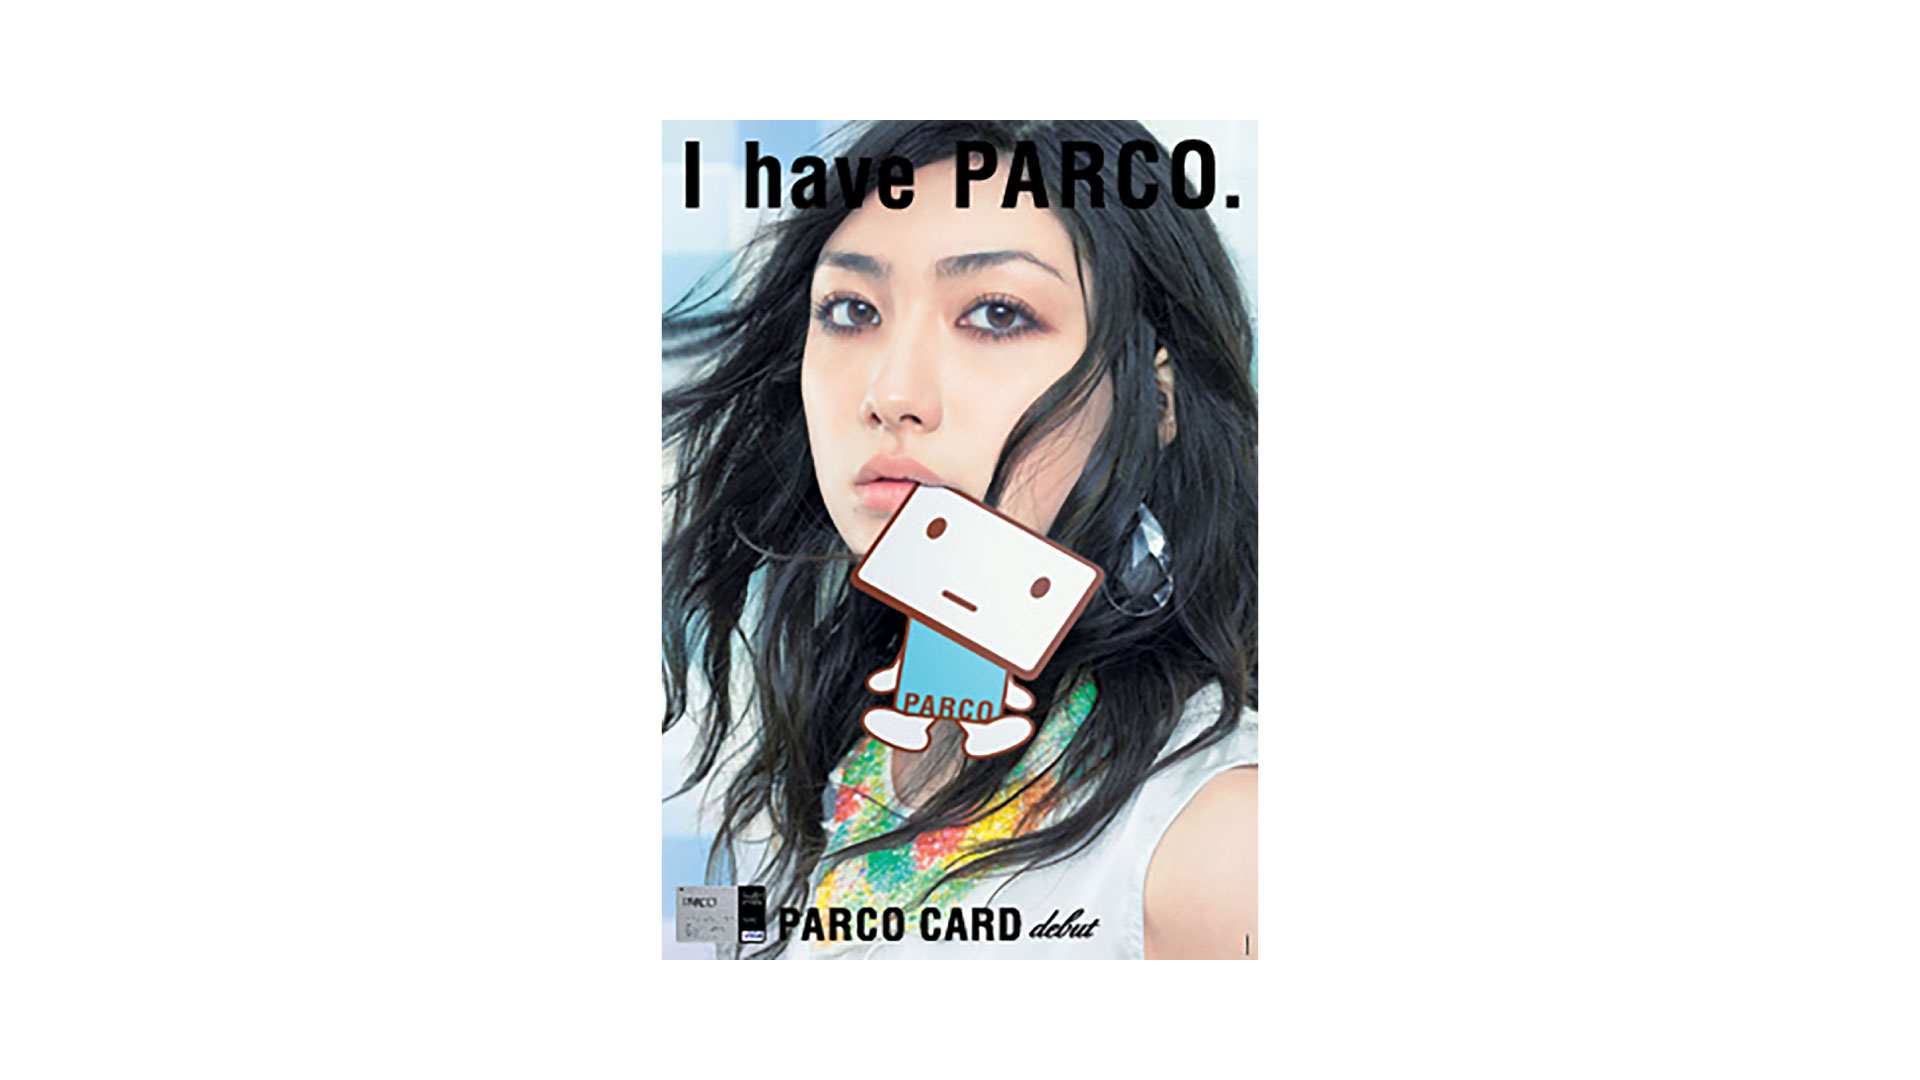 PARCO CARD